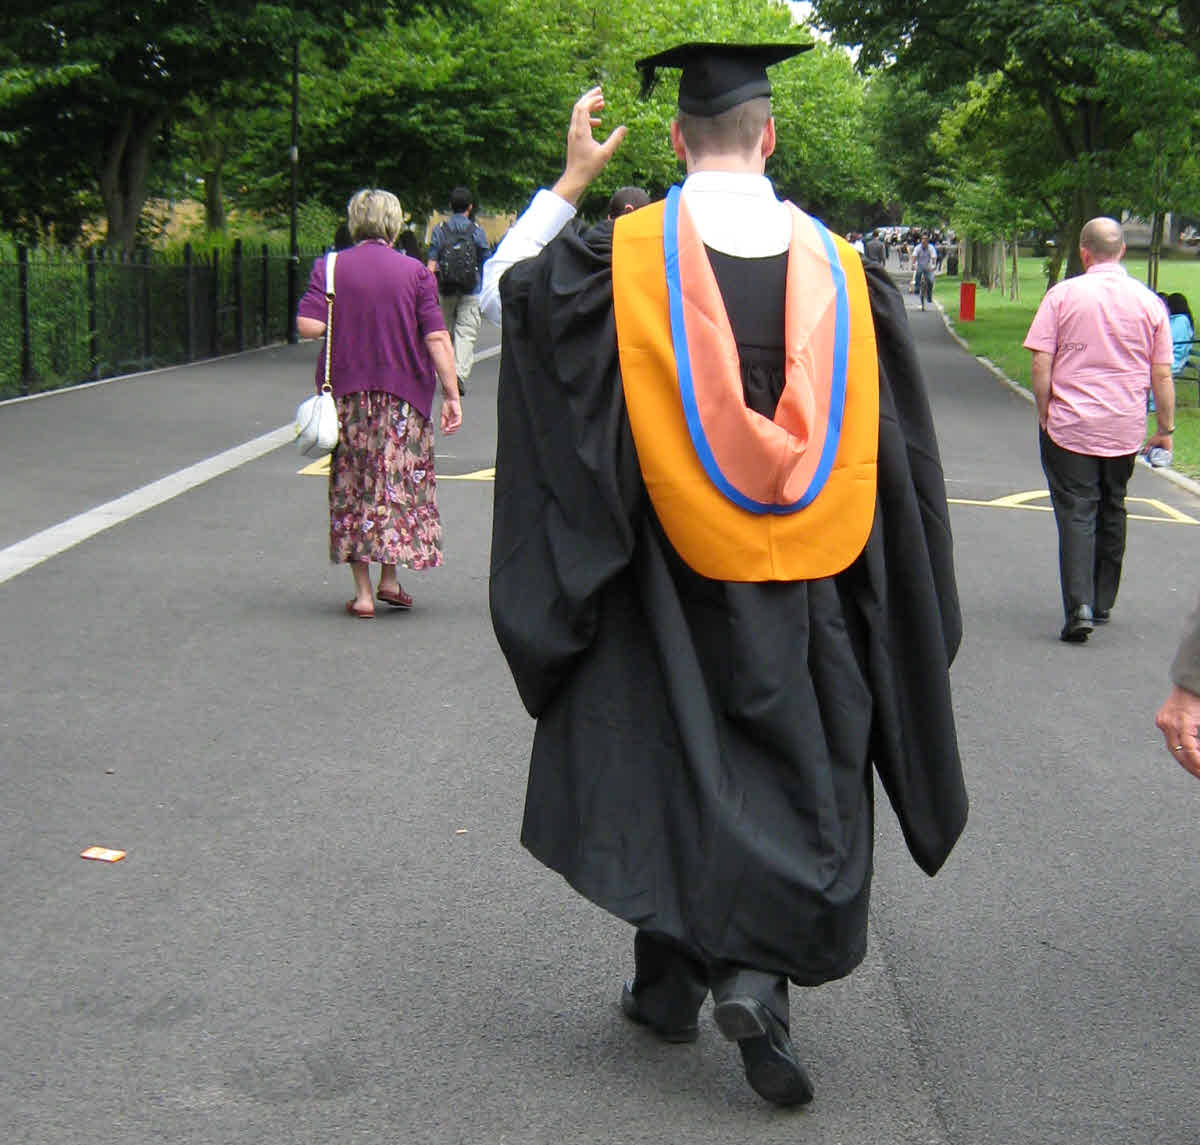 Graduation day a graduate walking down the street. Church leadership problems - choosing authentic leaders